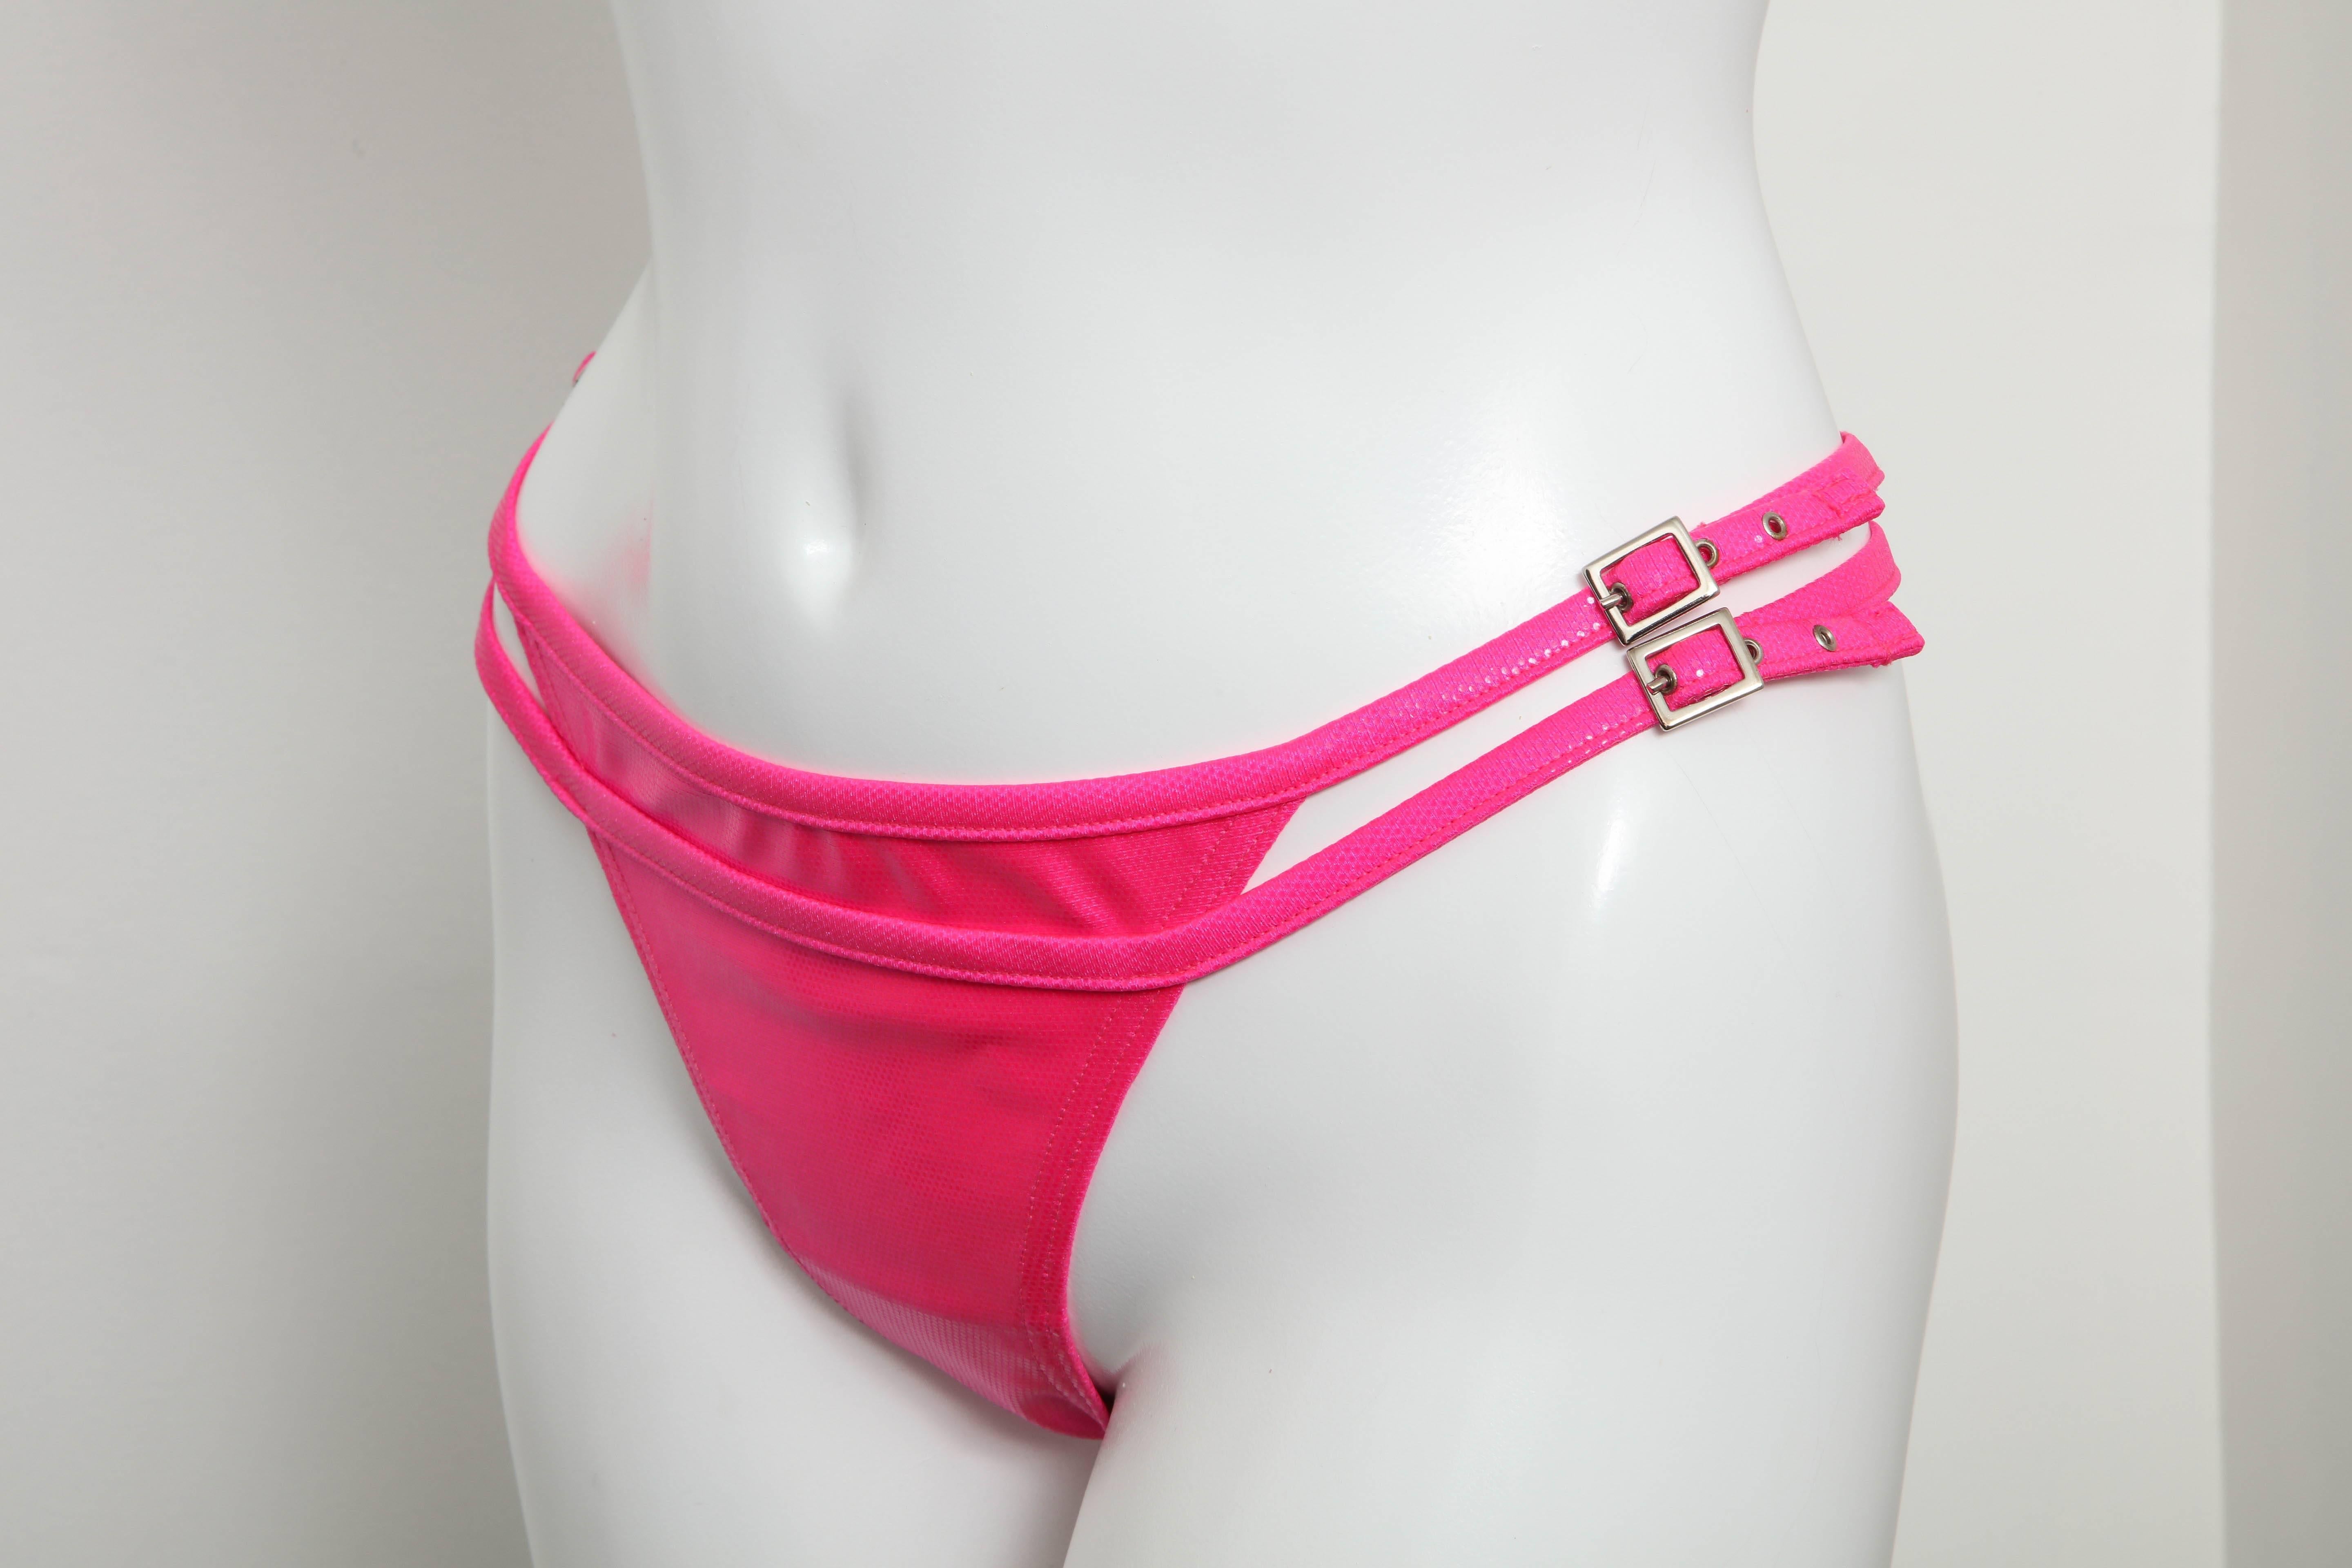 John Galliano for Christian Dior Pink Bikini For Sale 2